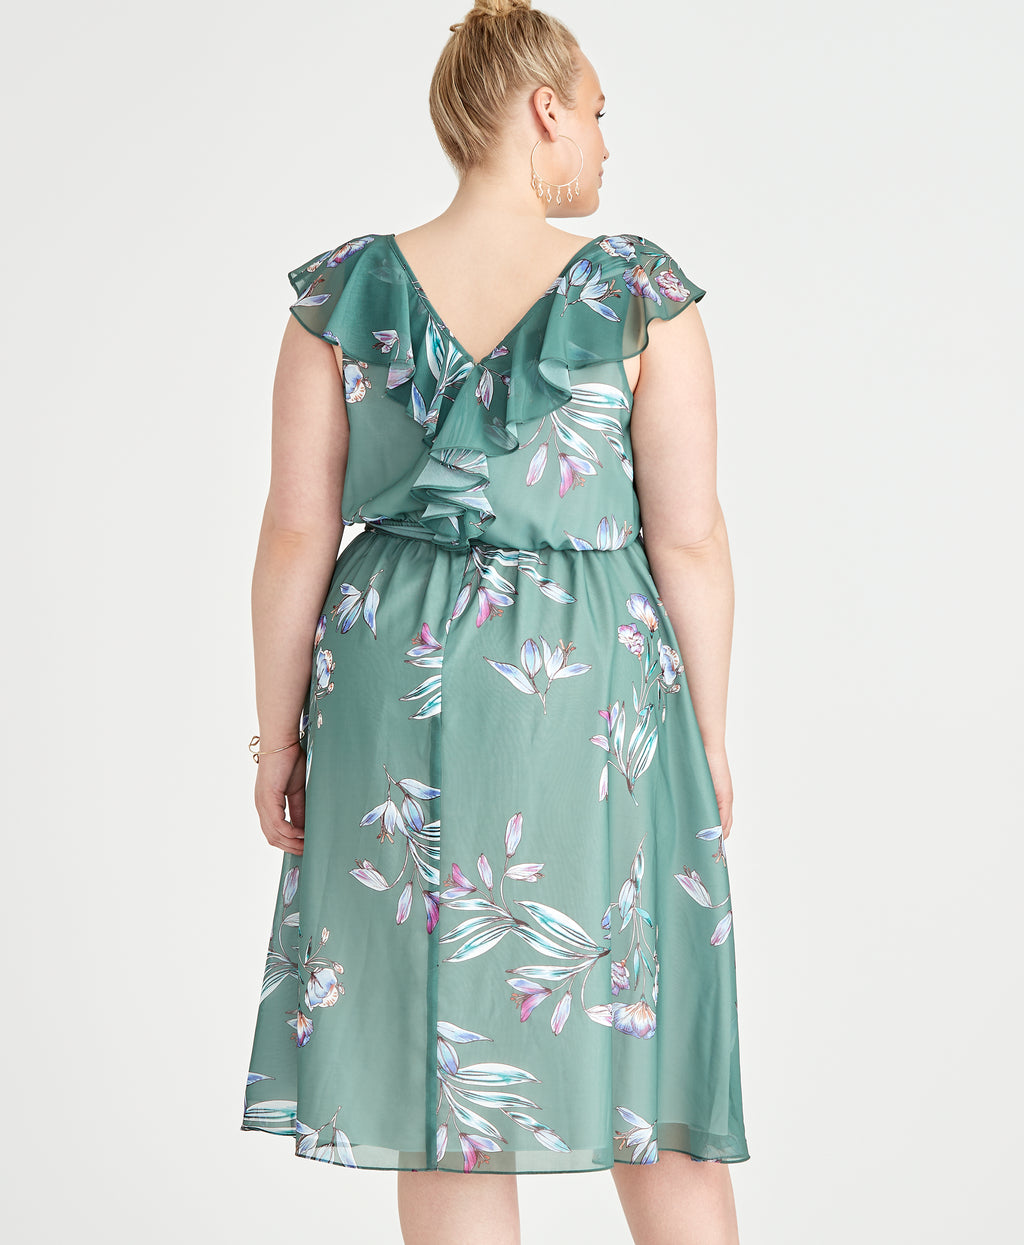 Odele Dress | Sage Combo